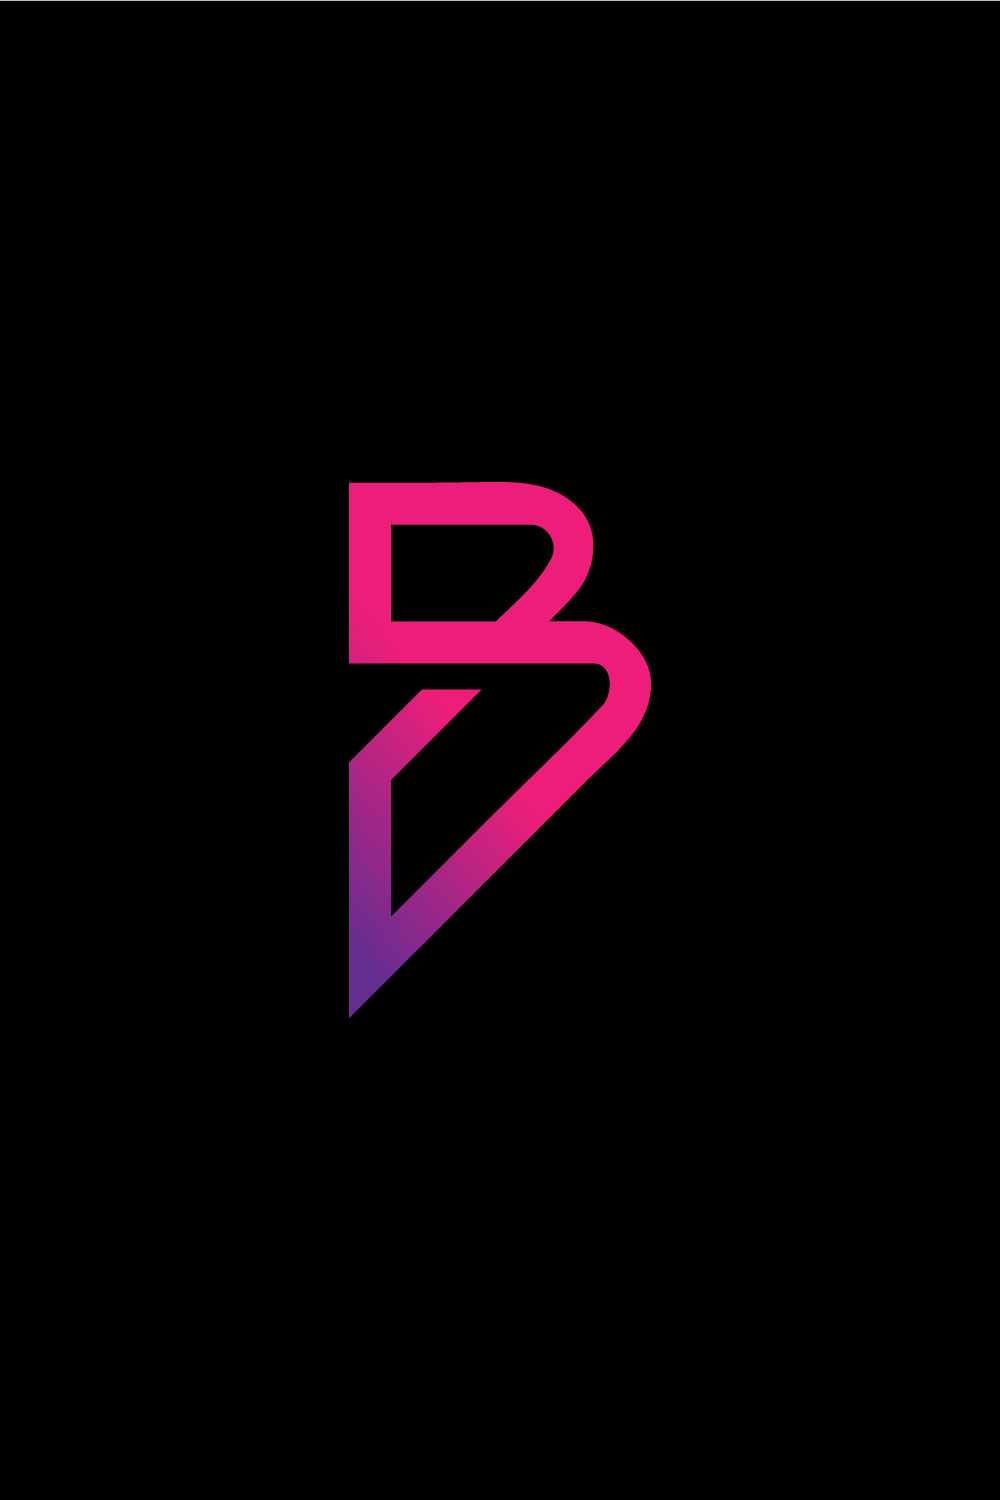 B Logo Design Pinterest image.